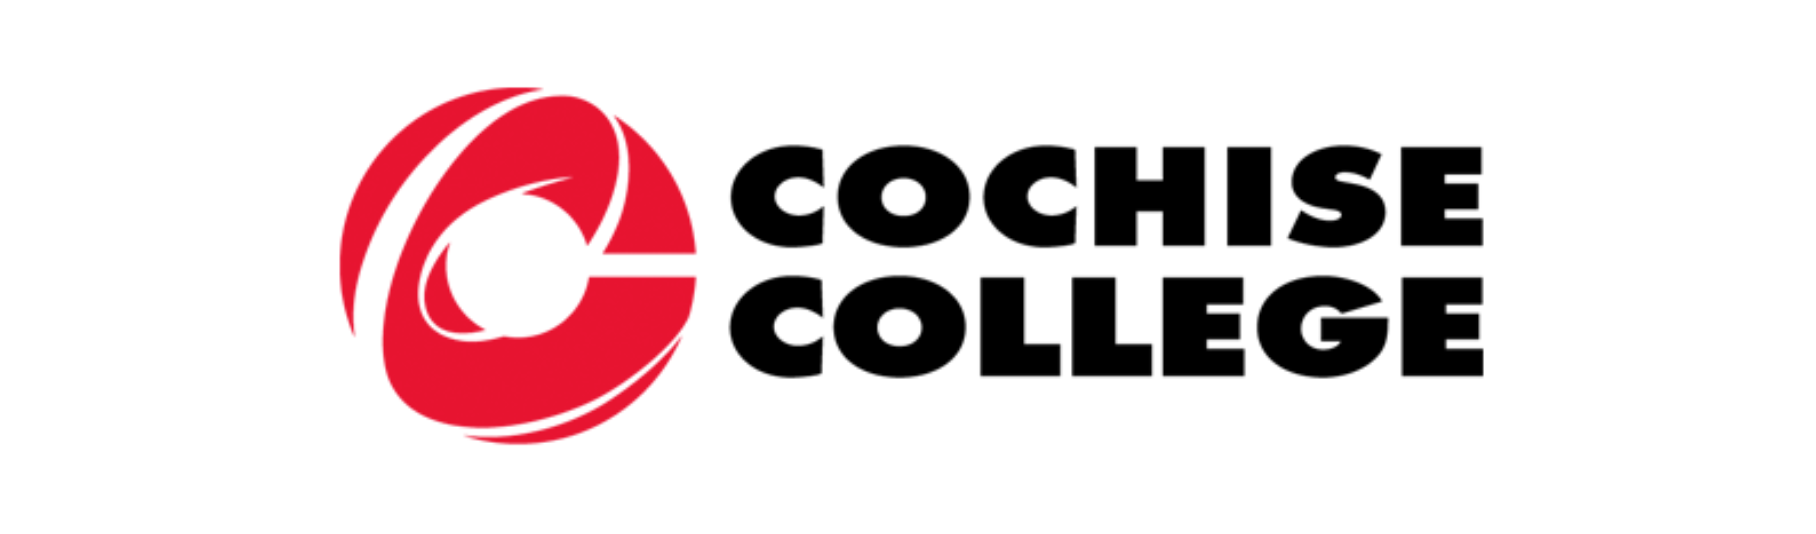 Cochise College logo